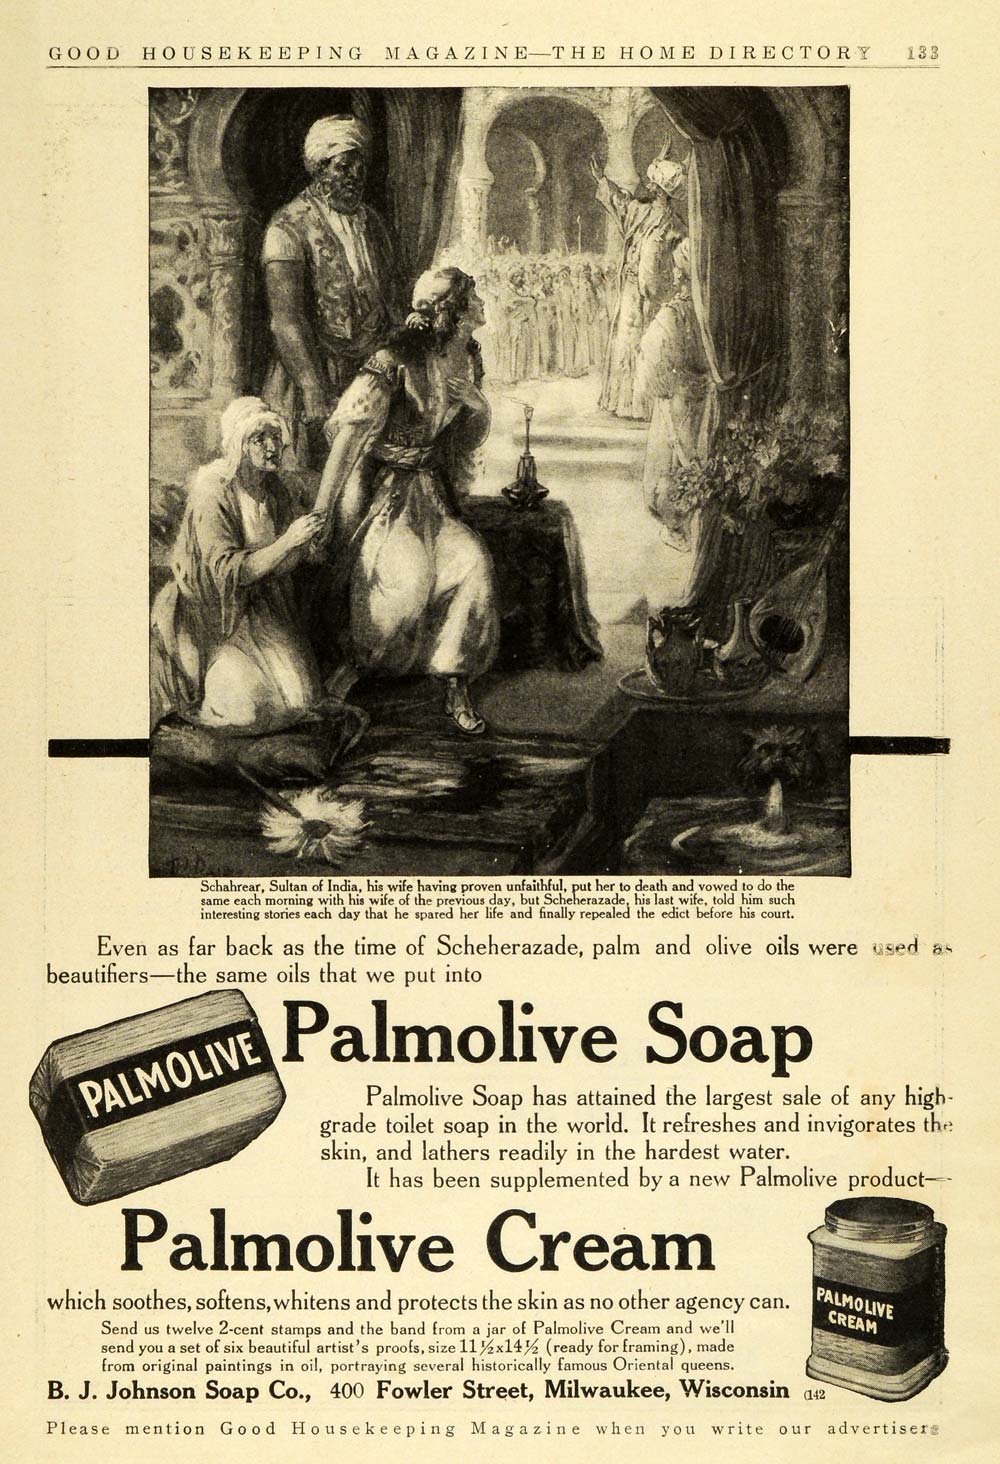 1911 Ad Palmolive Soap Cream Schahrear India Sultan Wife Scheherazade Skin GH4